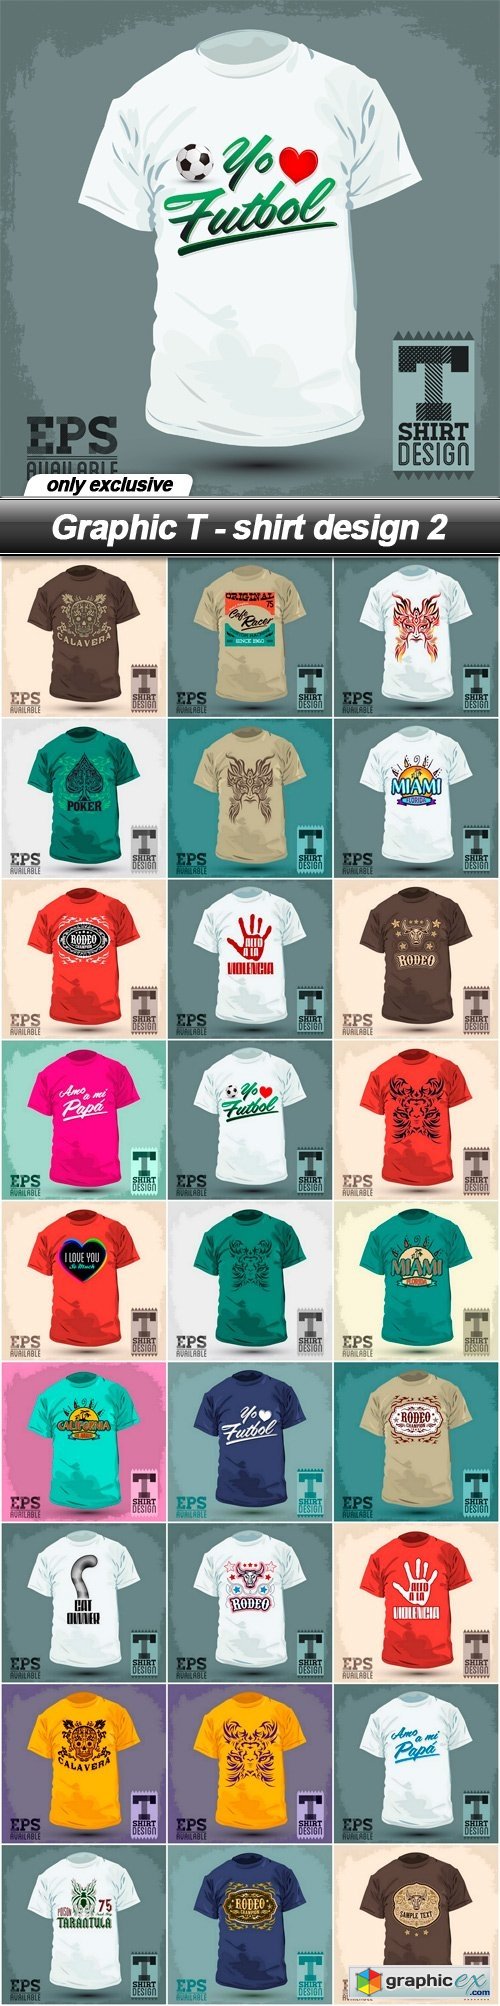 Graphic T - shirt design 2 - 27 EPS